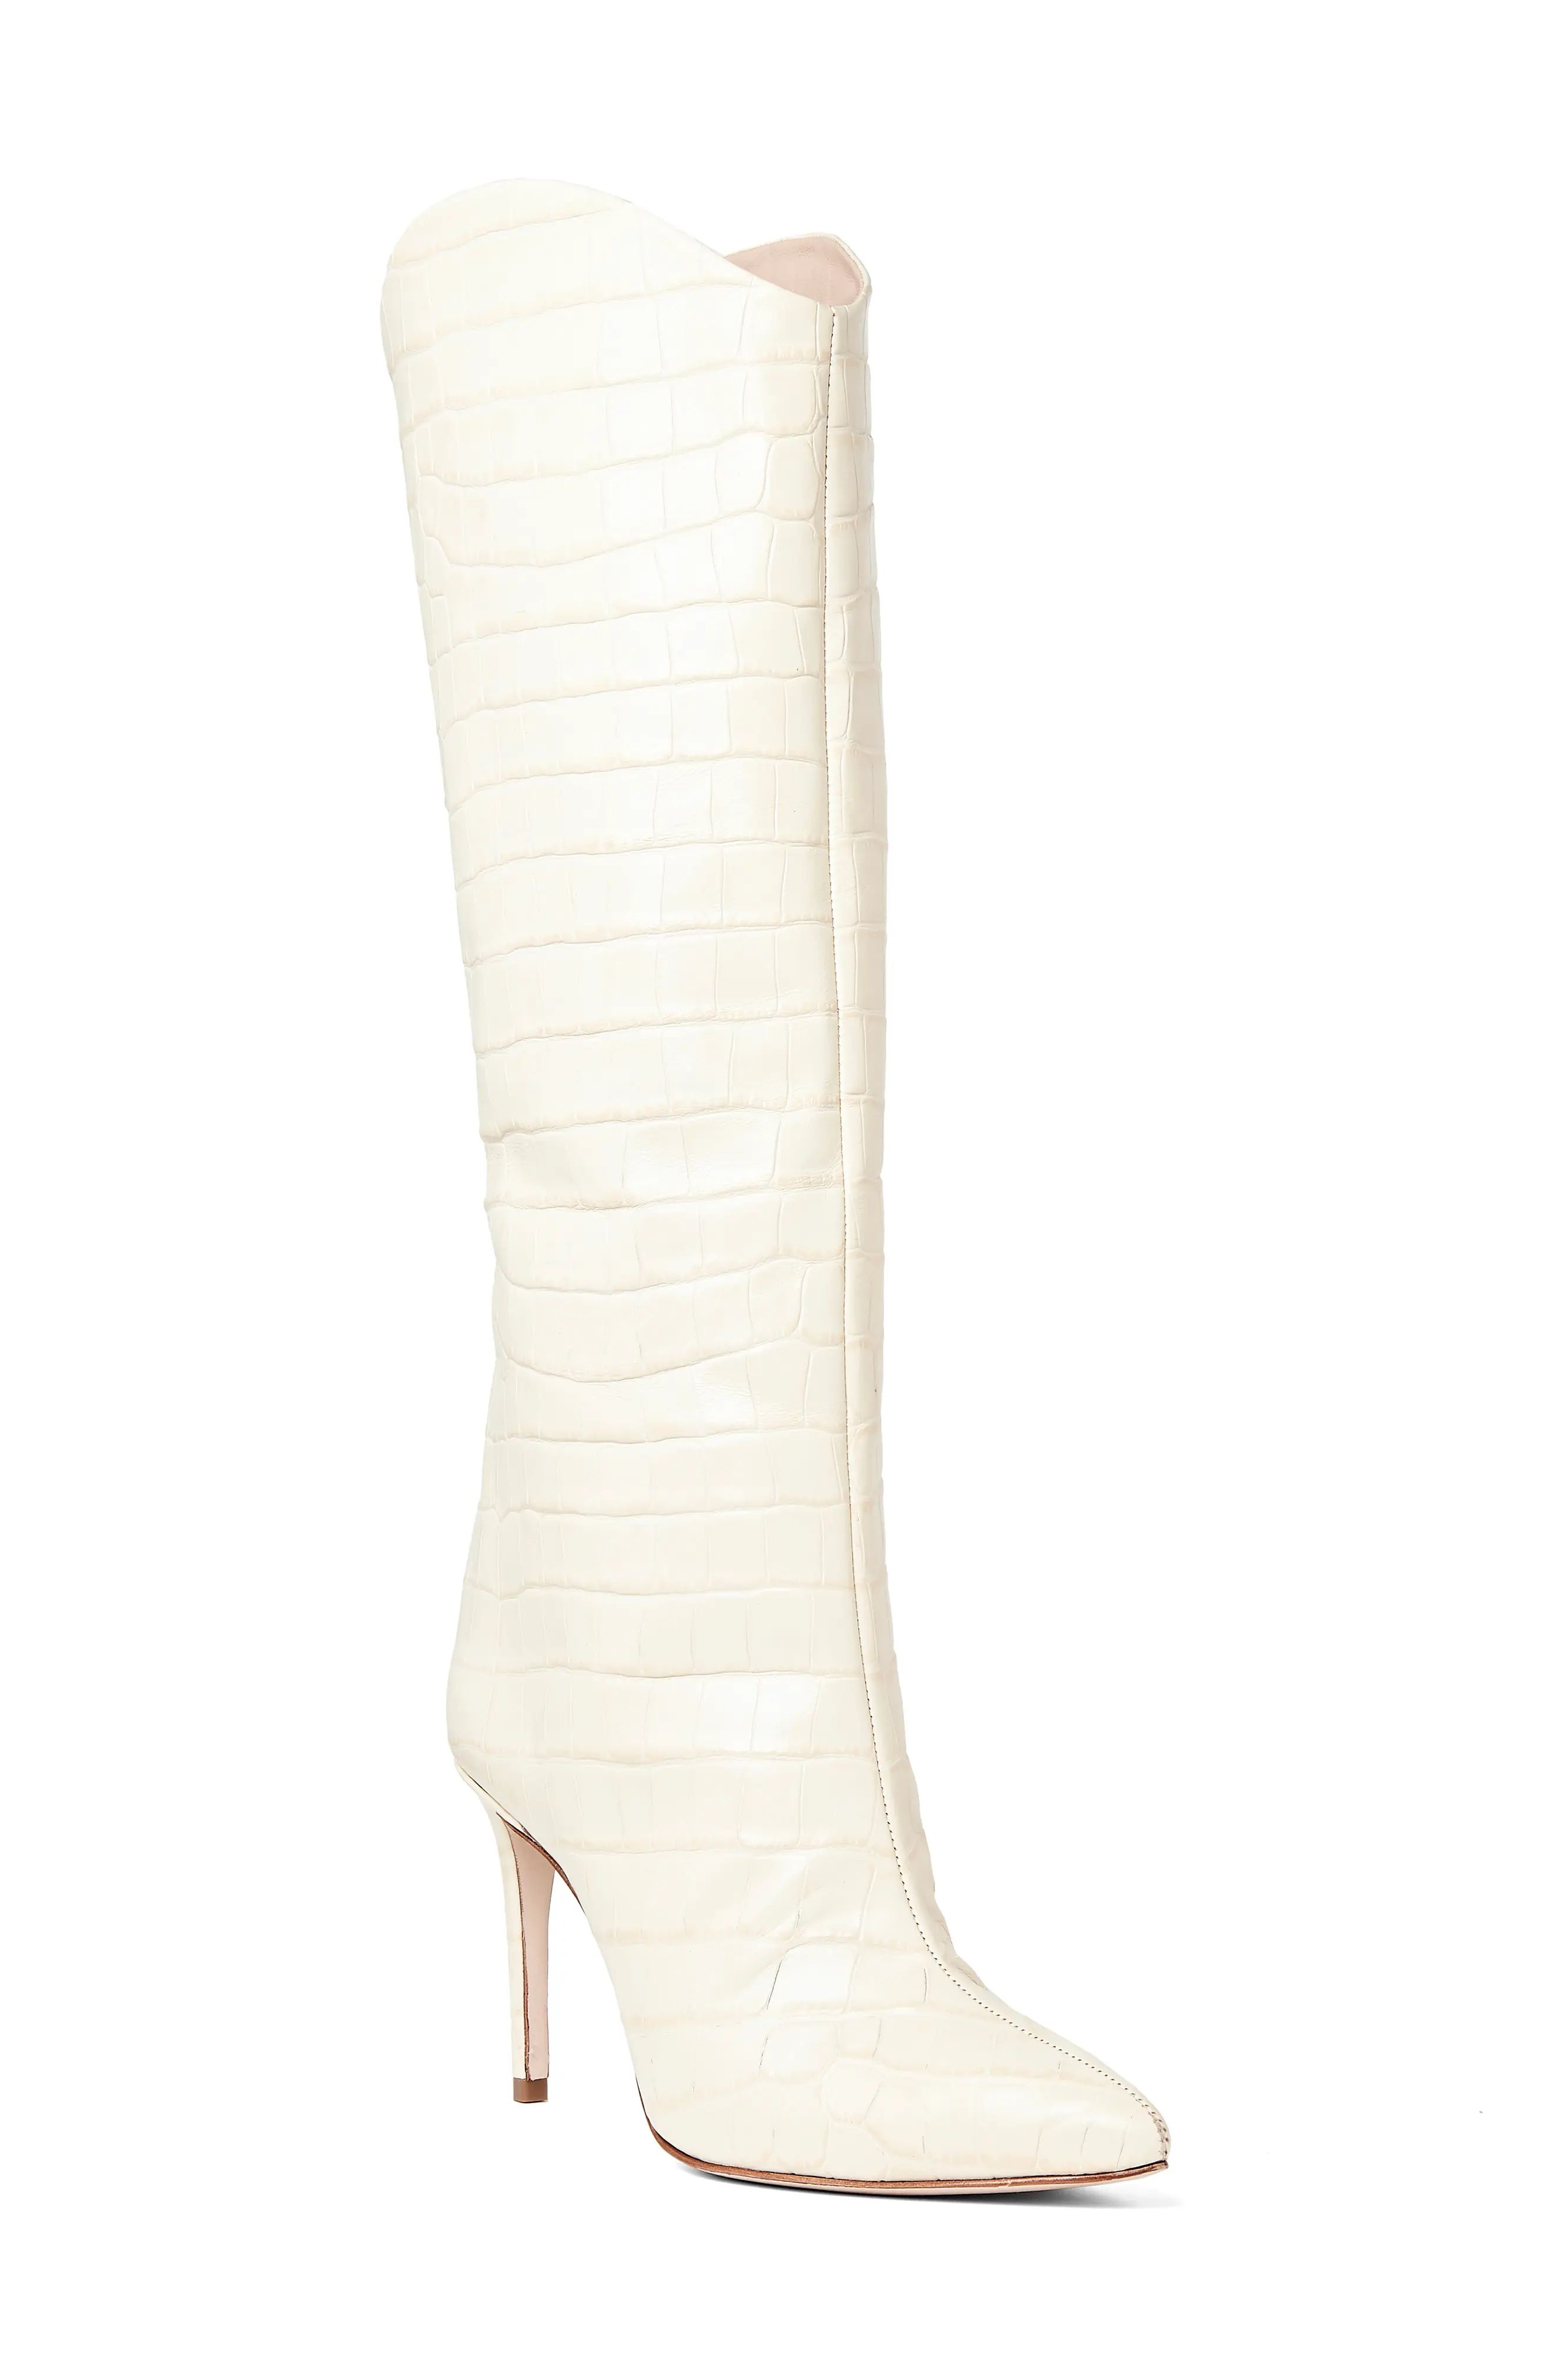 Women's Schutz Maryana Pointed Toe Boot, Size 10 M - White | Nordstrom